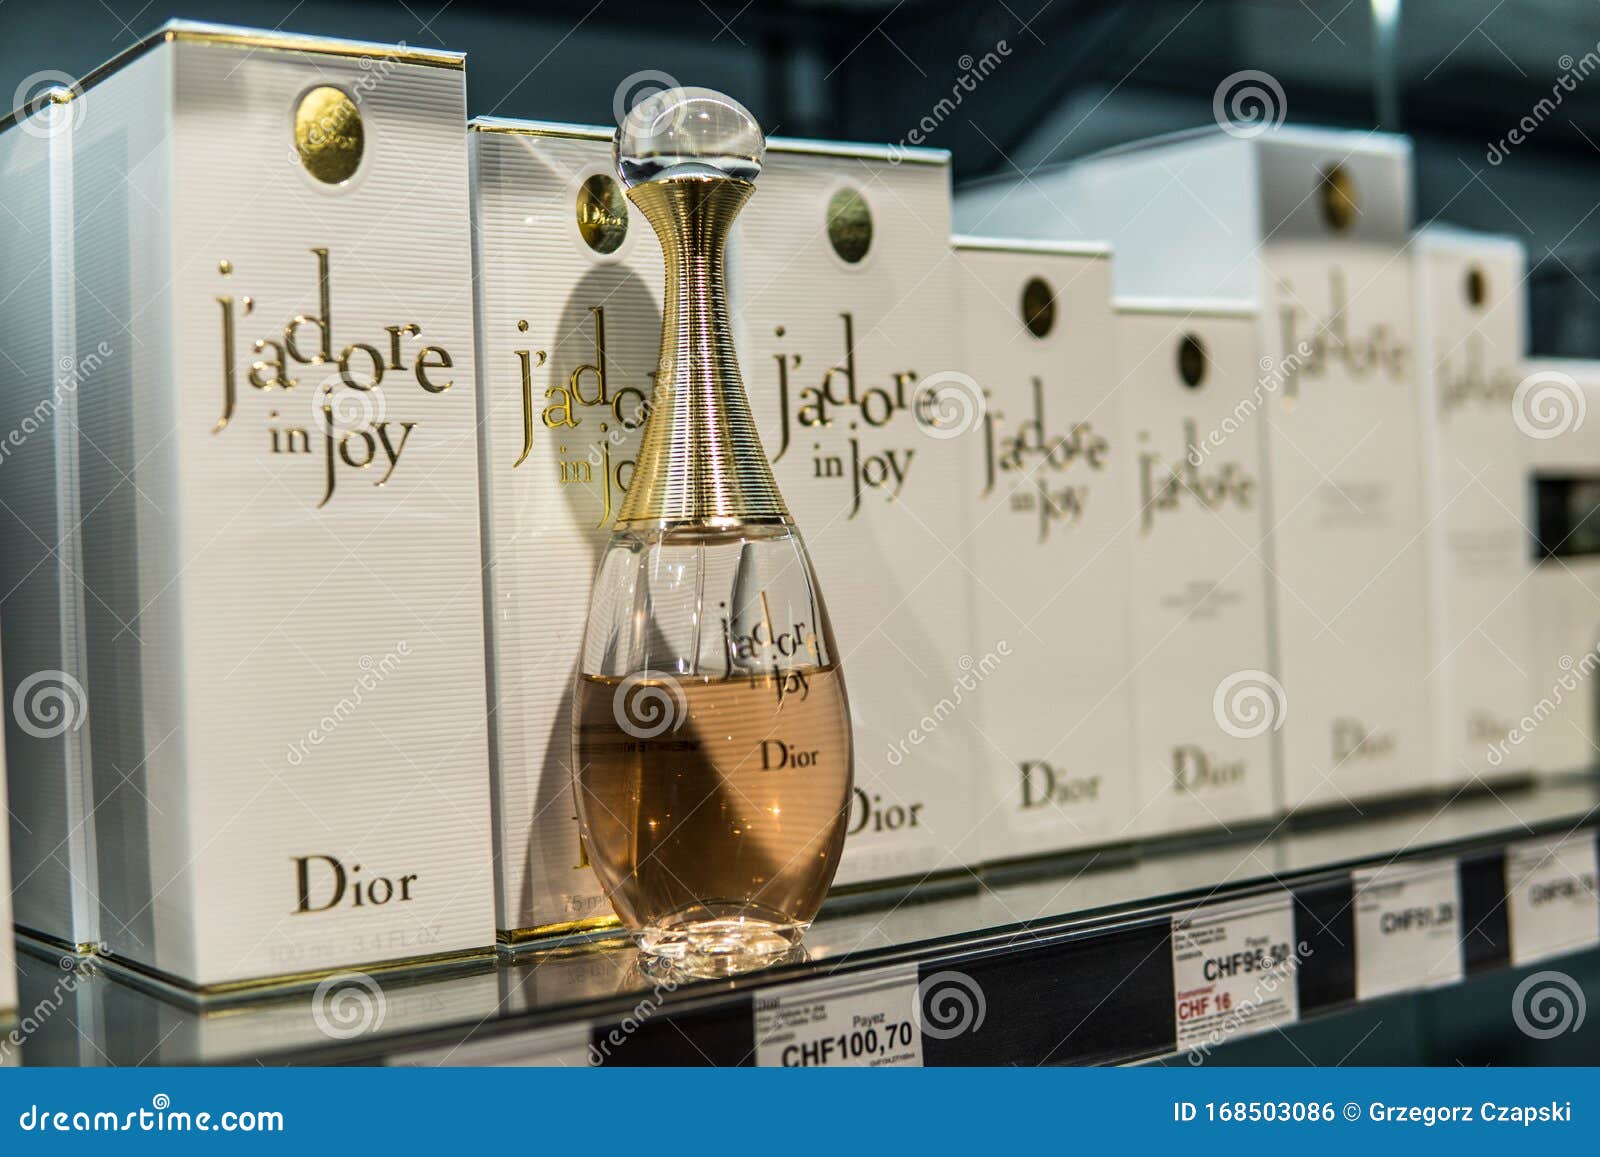 Dior JAdore In Joy Eau De Toilette Perfume for Women 34 Oz  Walmartcom